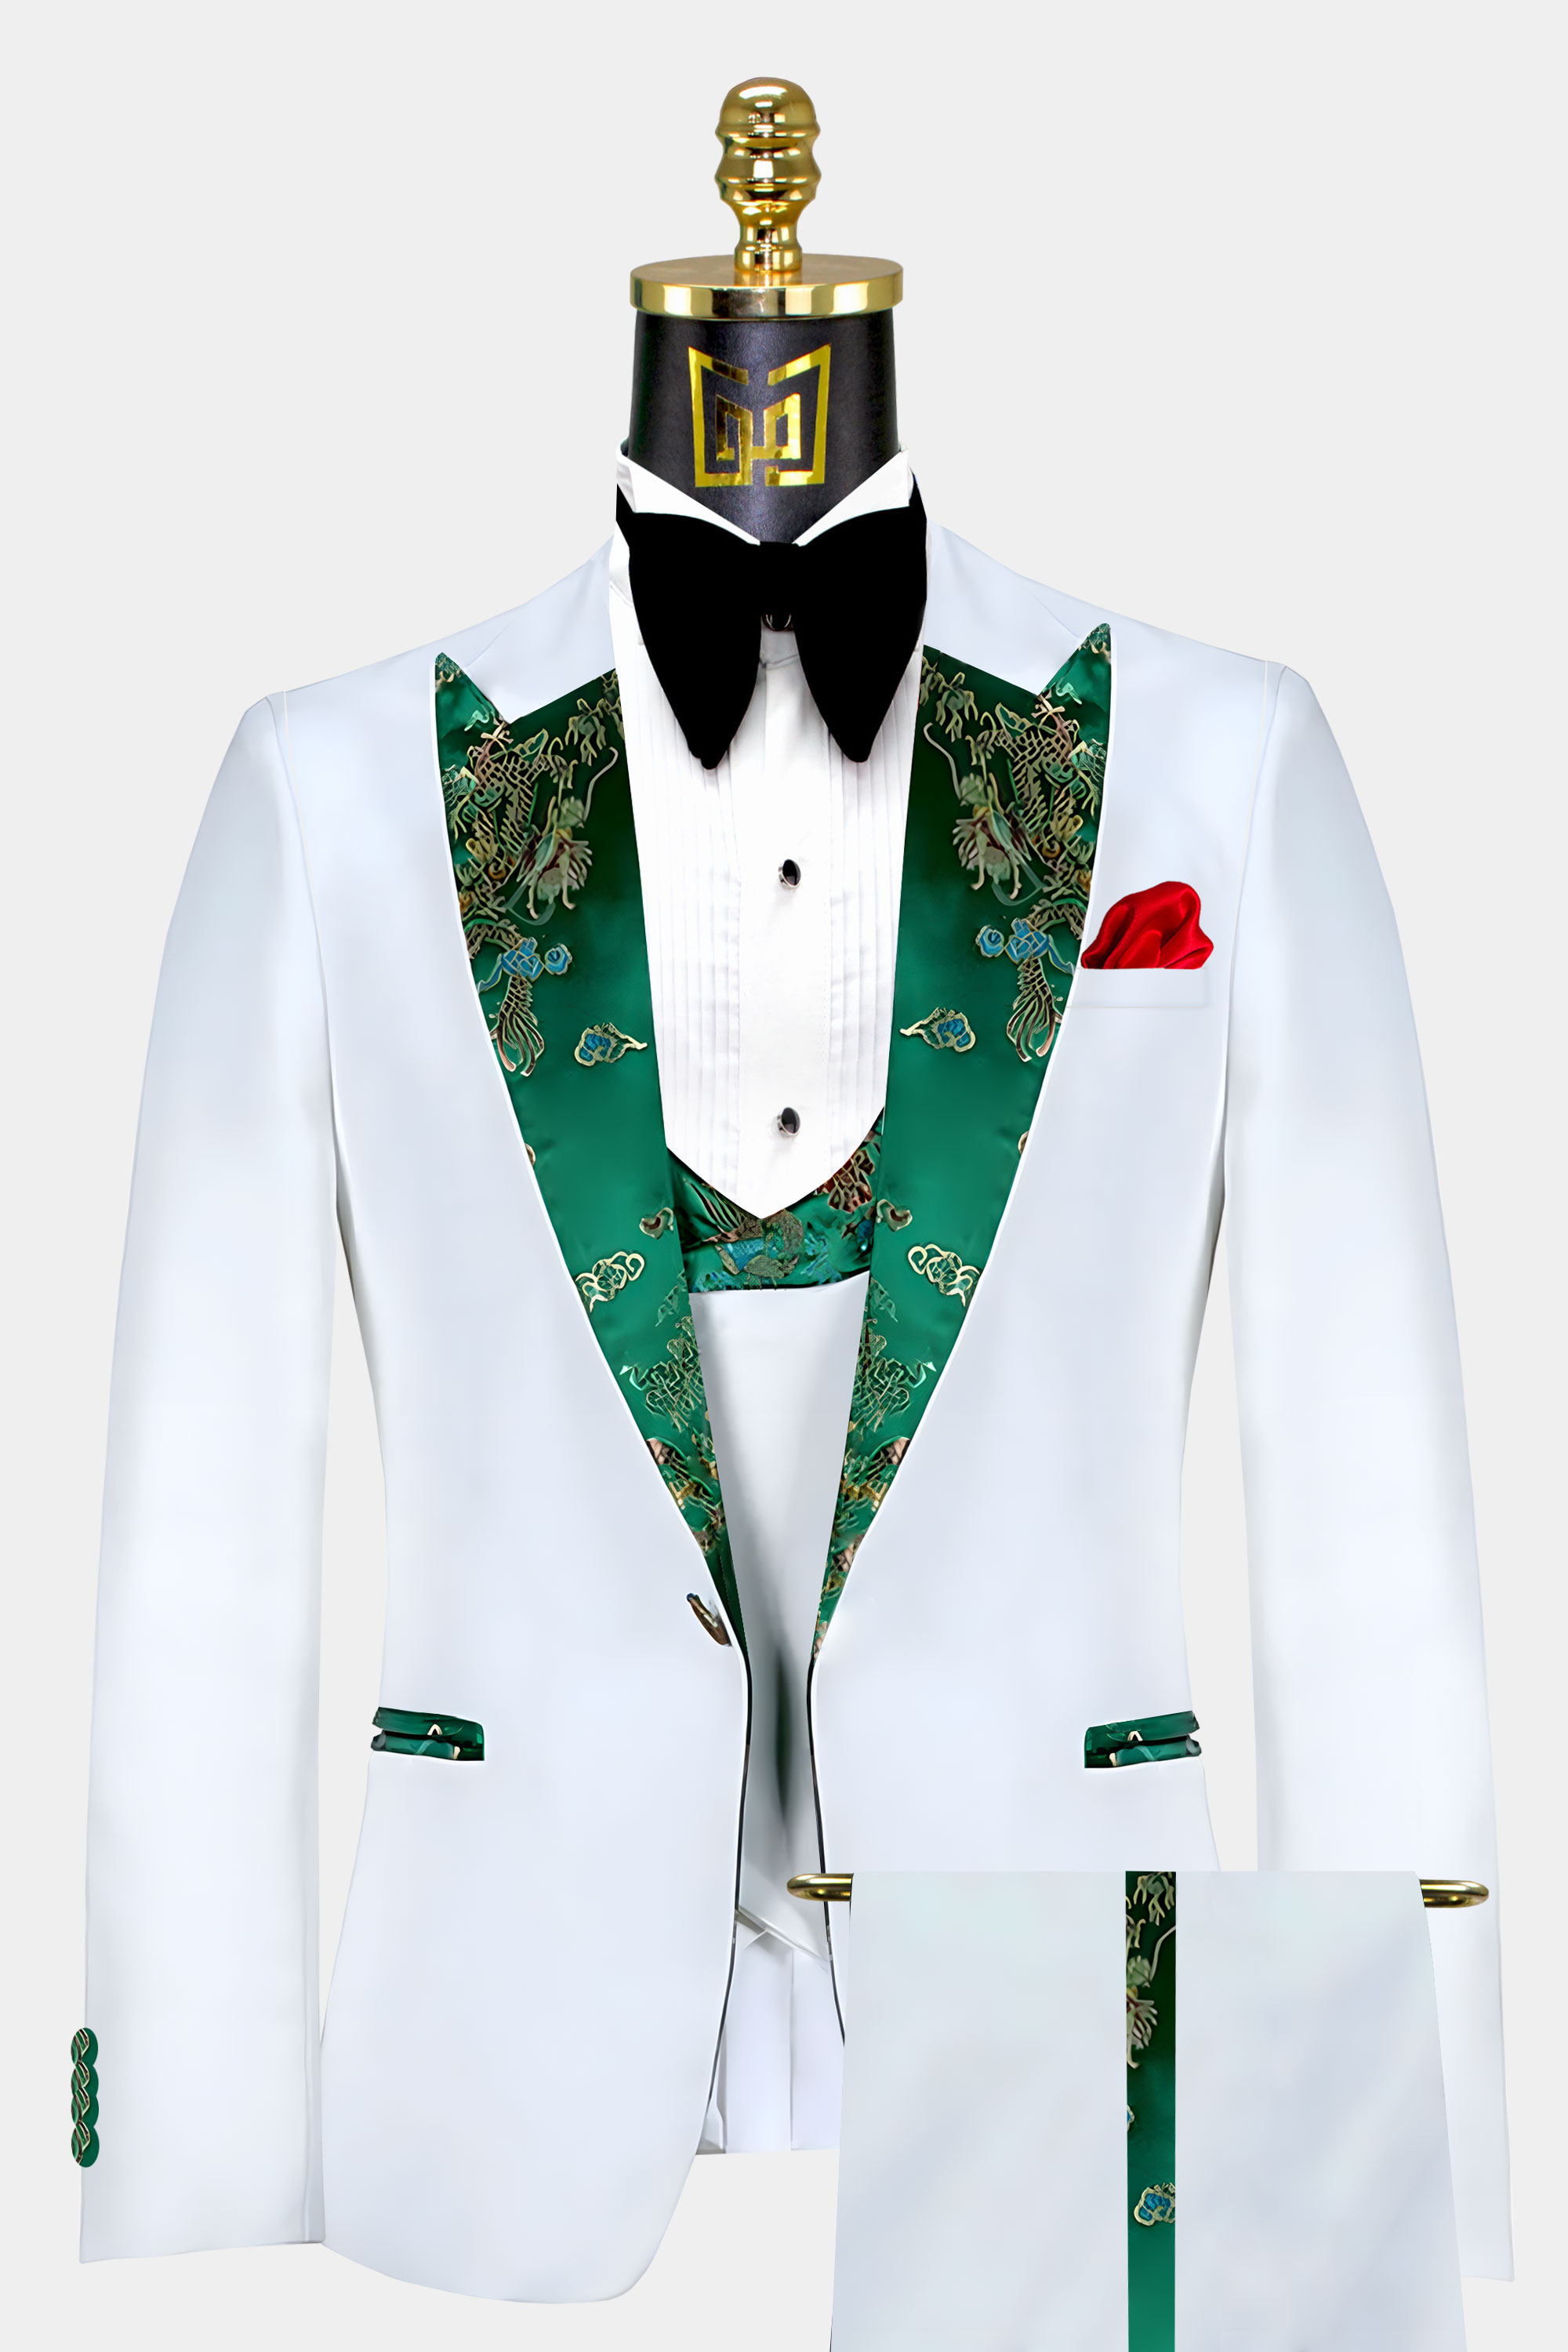 Mens-White-and-Green-Tuxedo-Groom-Wedding-Prom-Suit-from-Gentlemansguru.Com